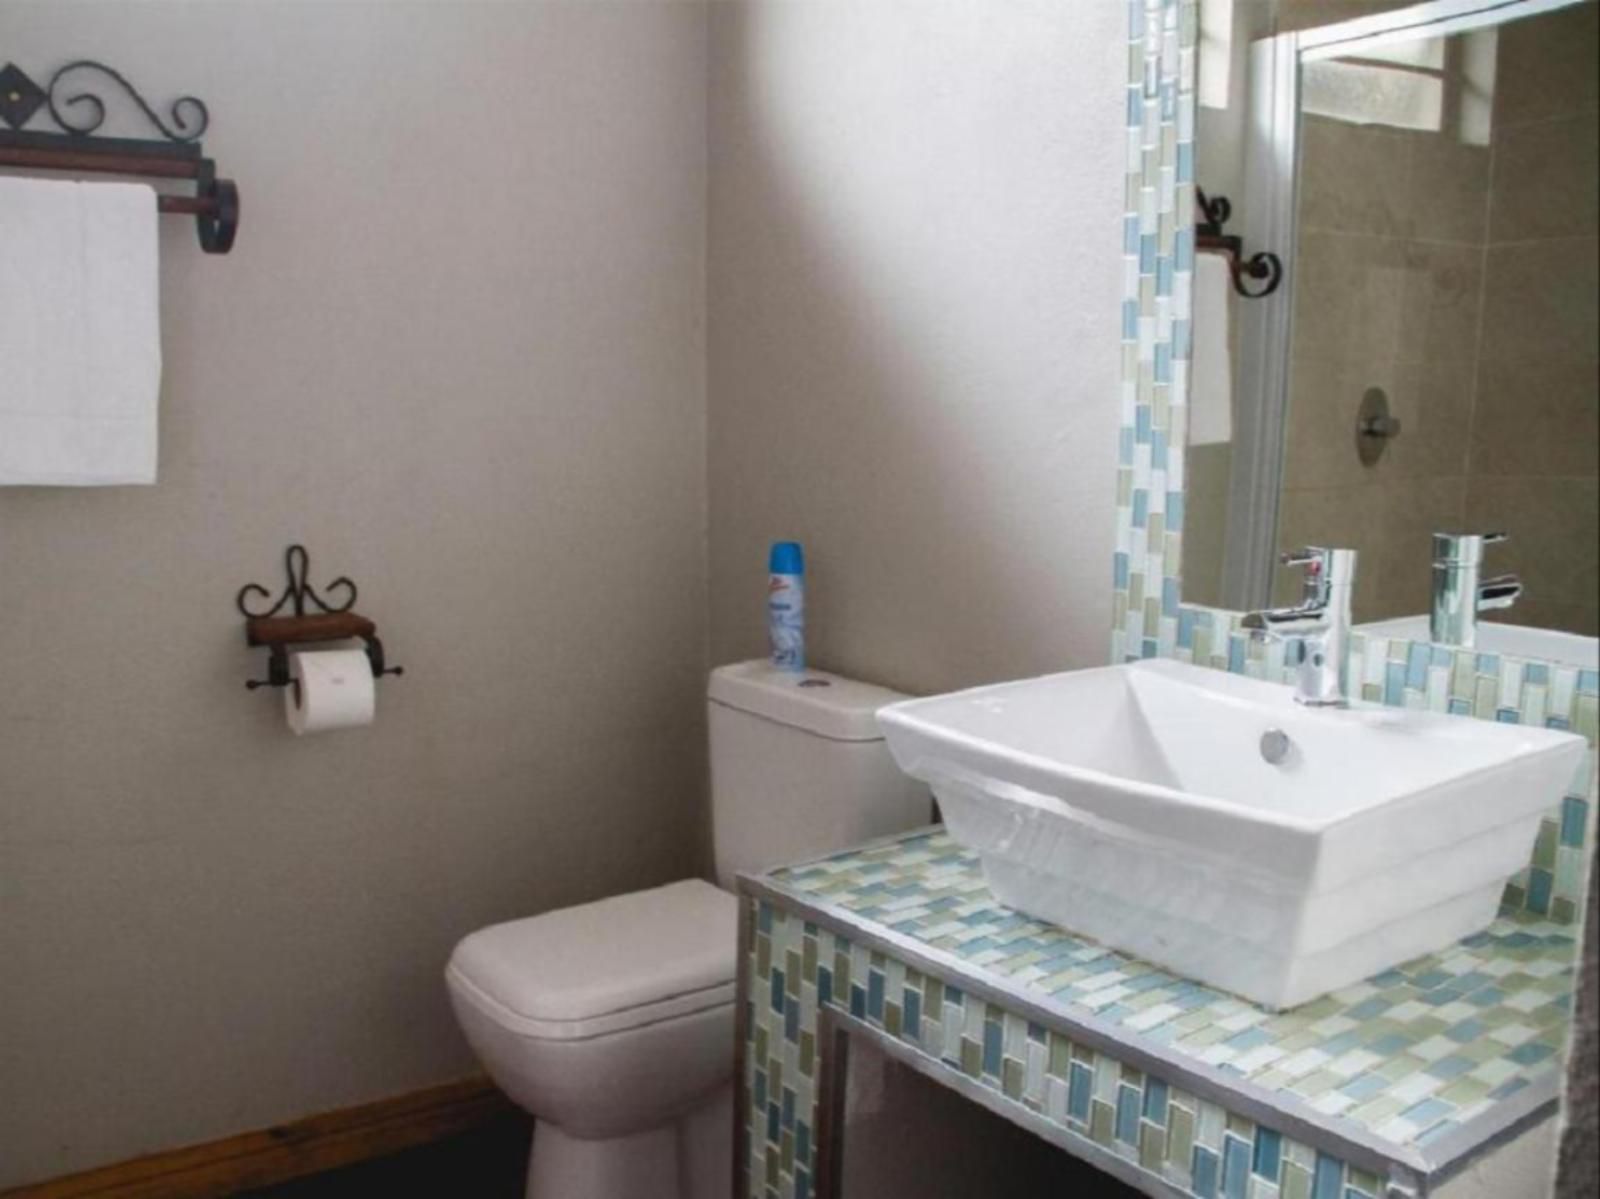 Matanja Guest Rooms Dan Pienaar Bloemfontein Free State South Africa Unsaturated, Bathroom